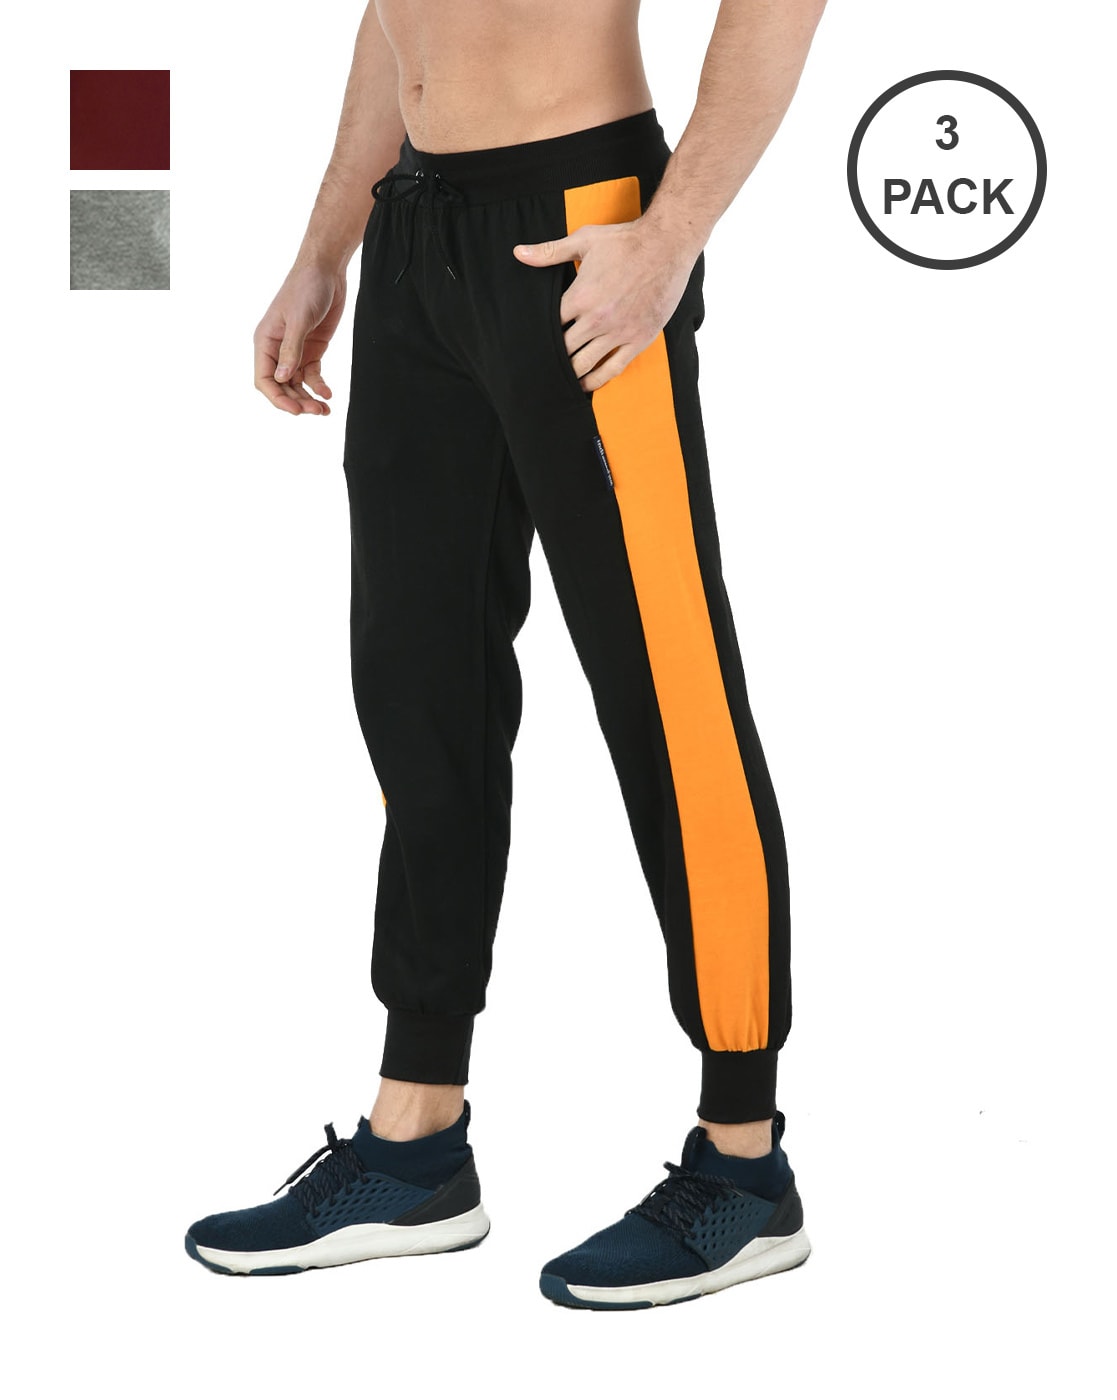 Unisex Retro Tracksuit Pants - Black / Blood Orange